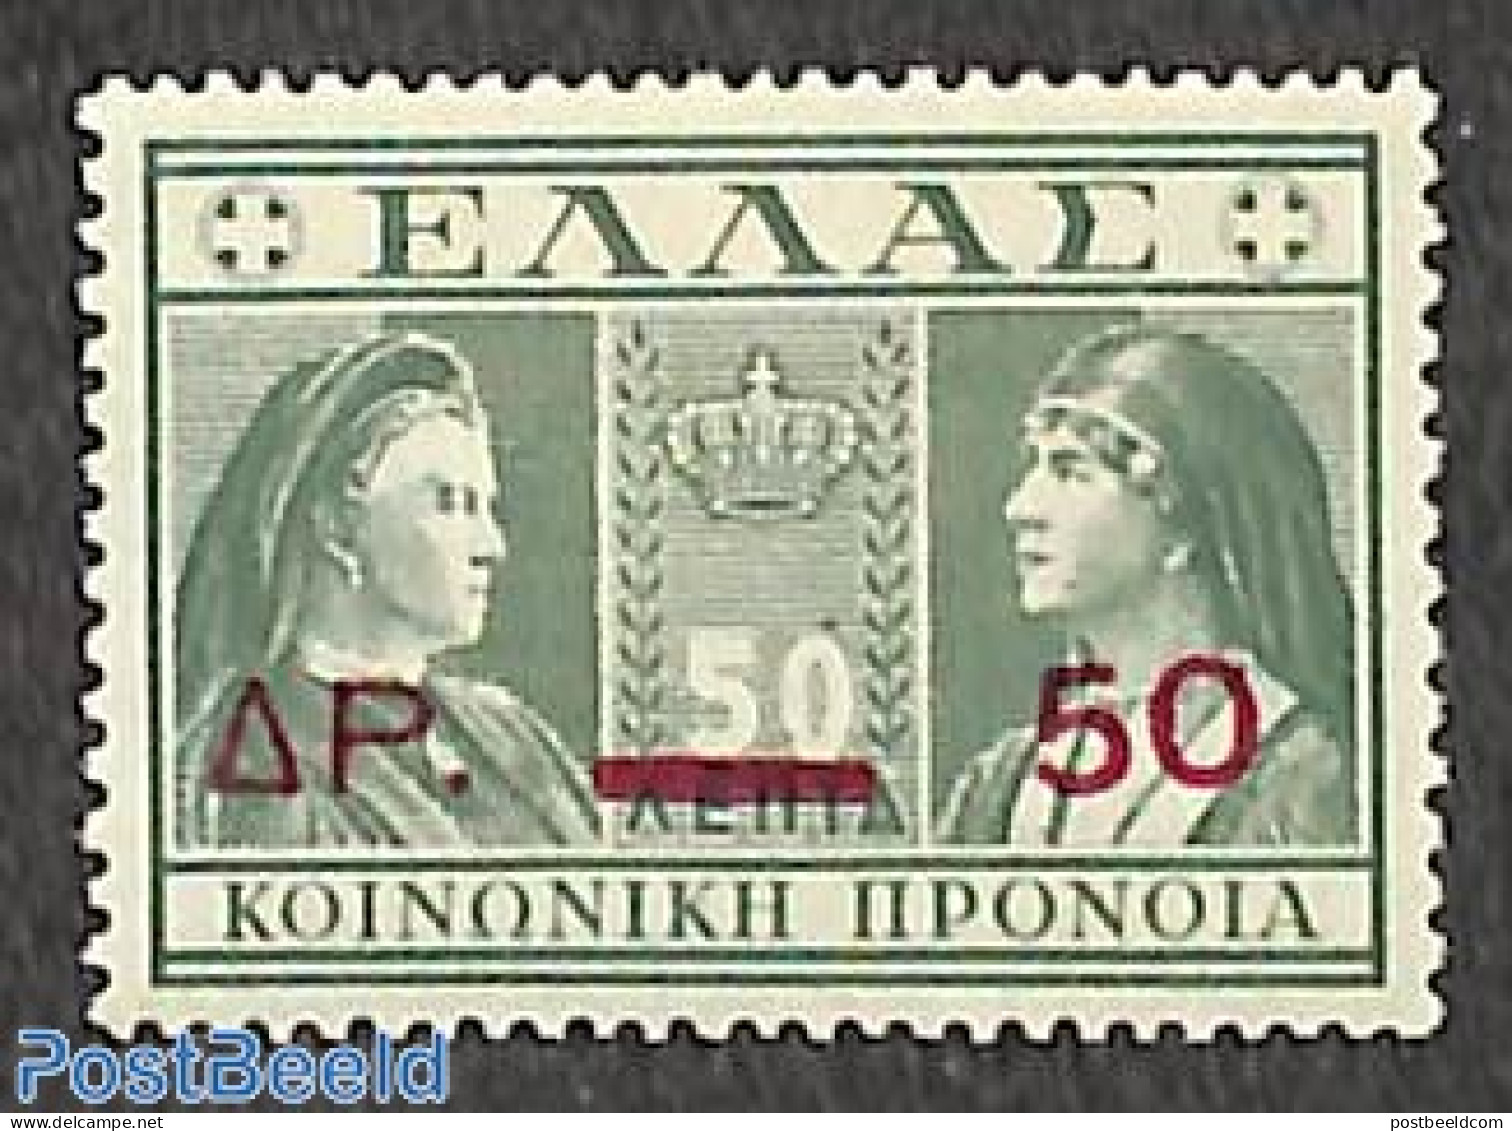 Greece 1947 Welfare Stamp 50Dr On 50L 1v, Mint NH - Ongebruikt